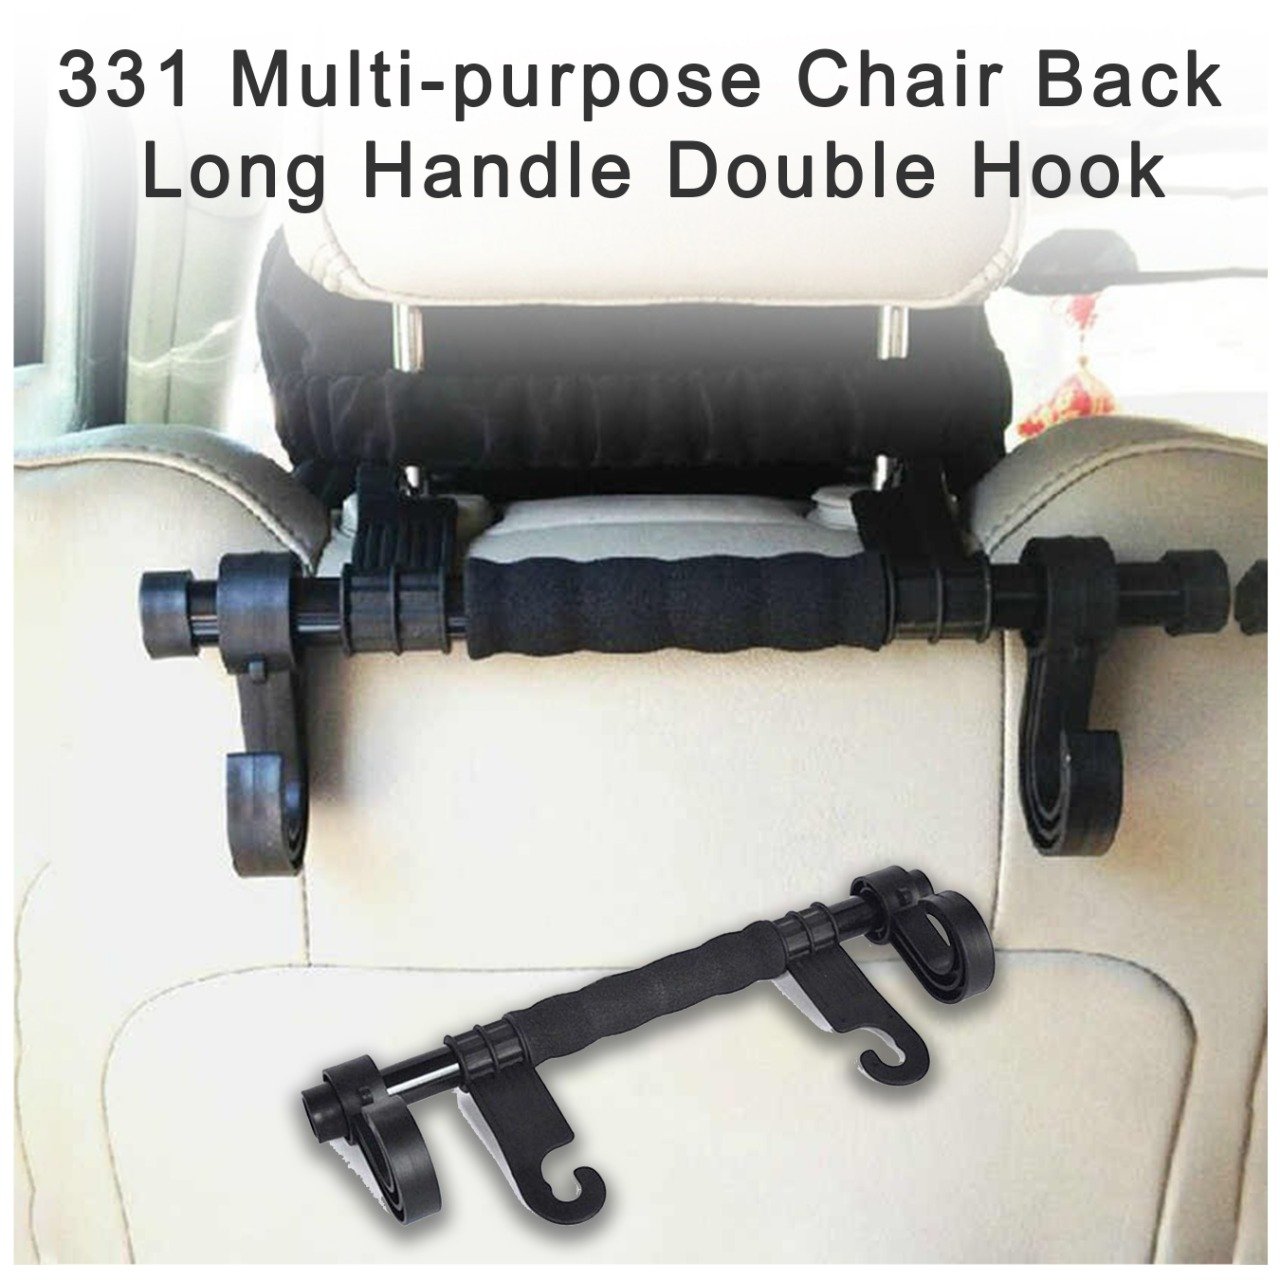 0331 Multi-purpose Chair Back Long Handle Double Hook - SkyShopy